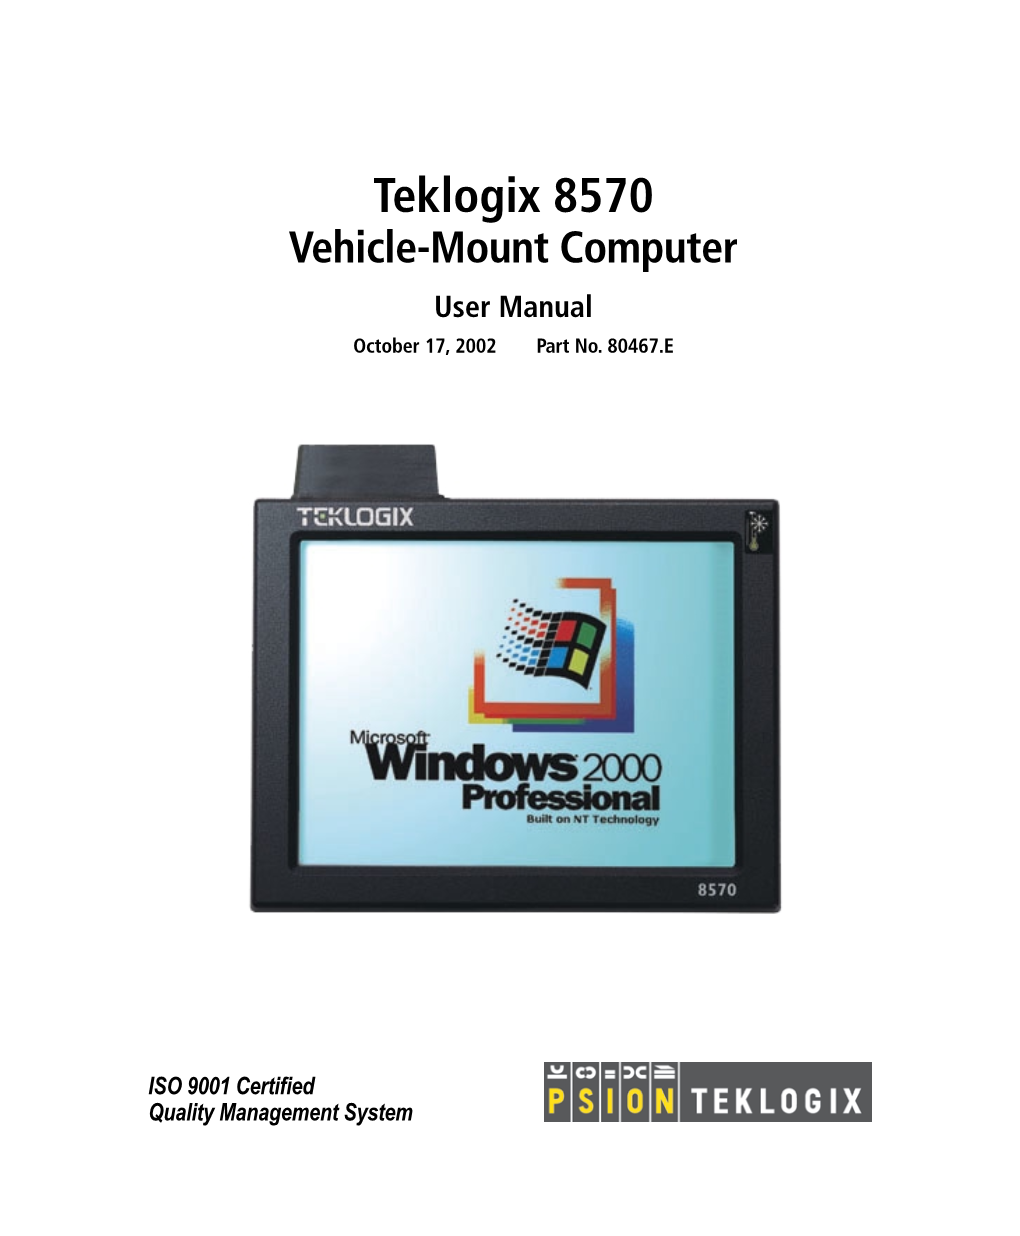 Teklogix 8570 Vehicle-Mount Computer User Manual October 17, 2002 Part No